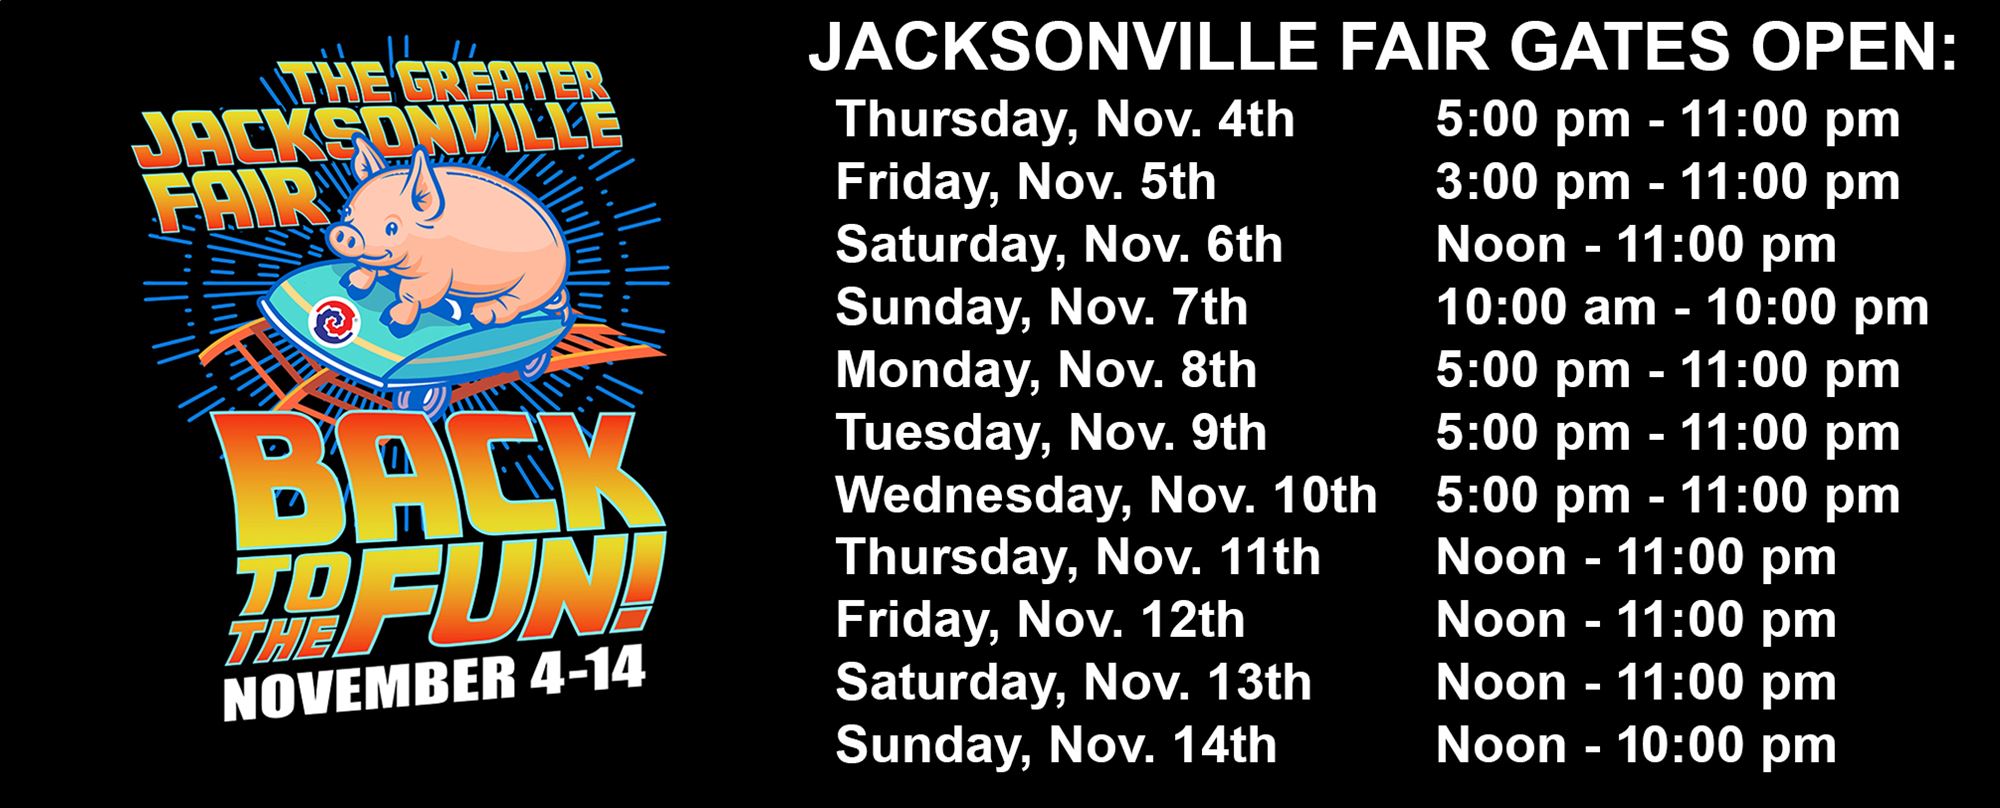 The Jacksonville Fairgrounds